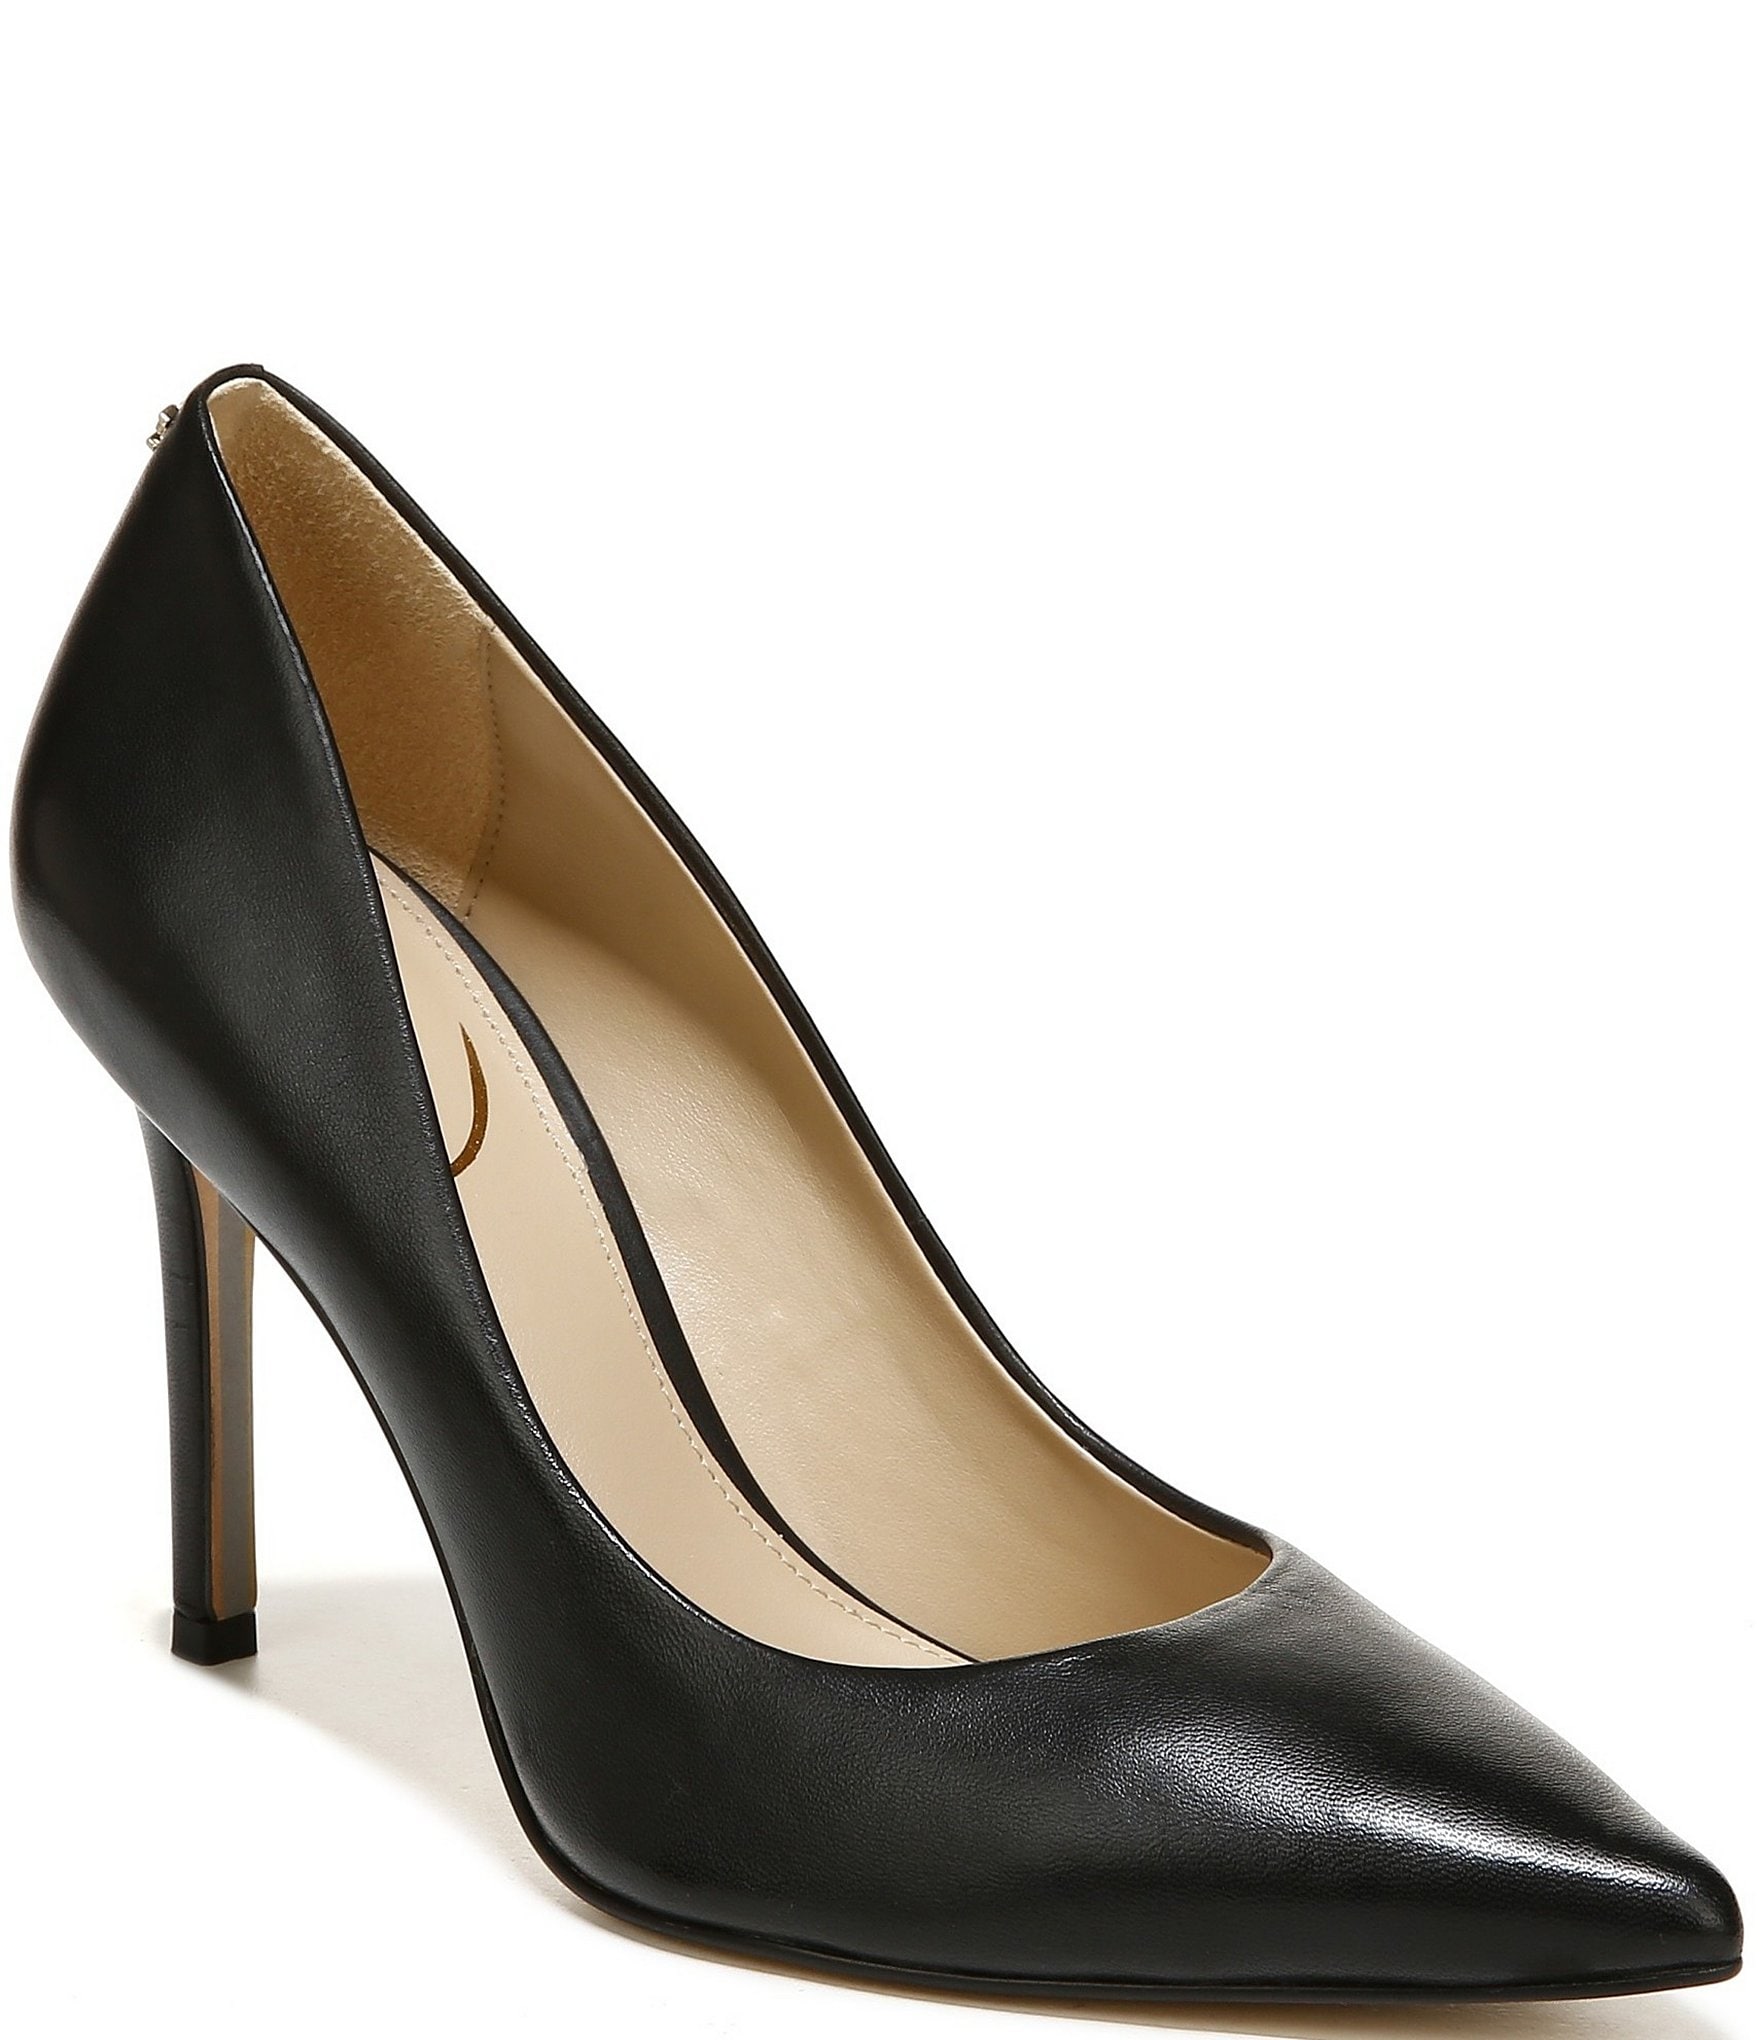 Buy > black heels sam edelman > in stock